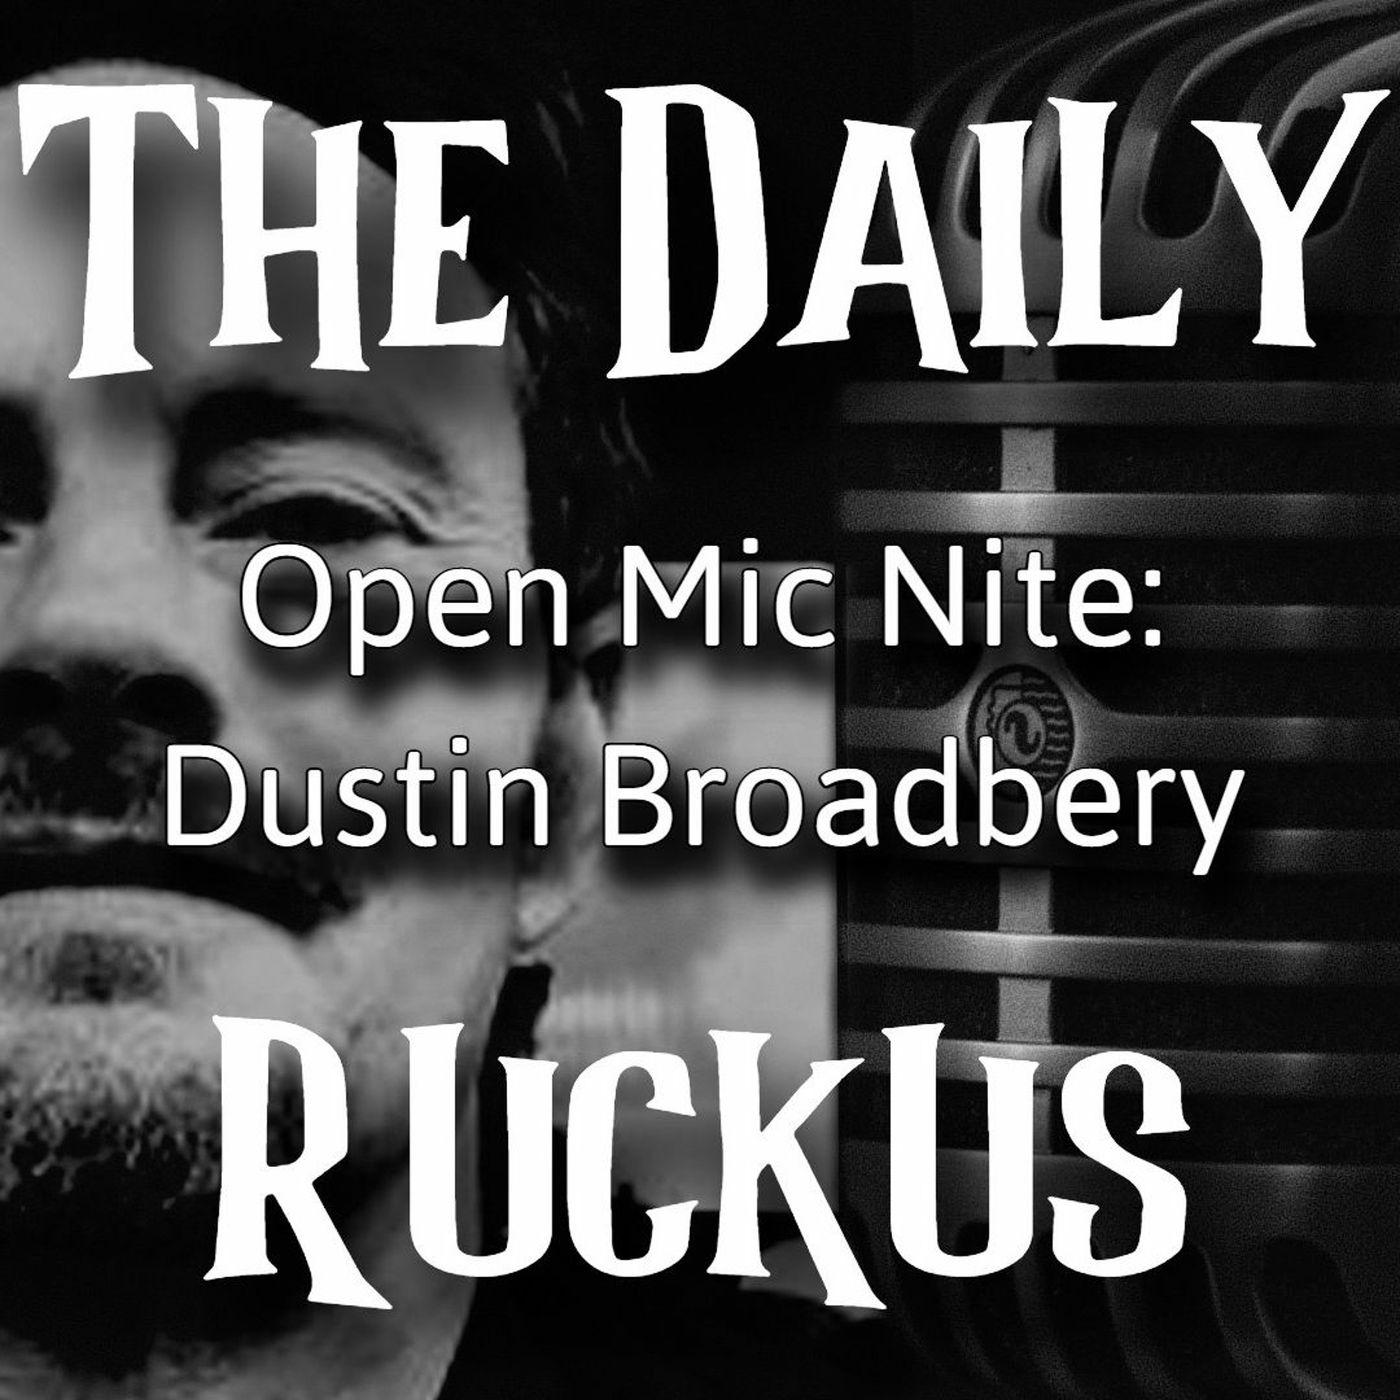 Open Mic Nite: Dustin Broadbery